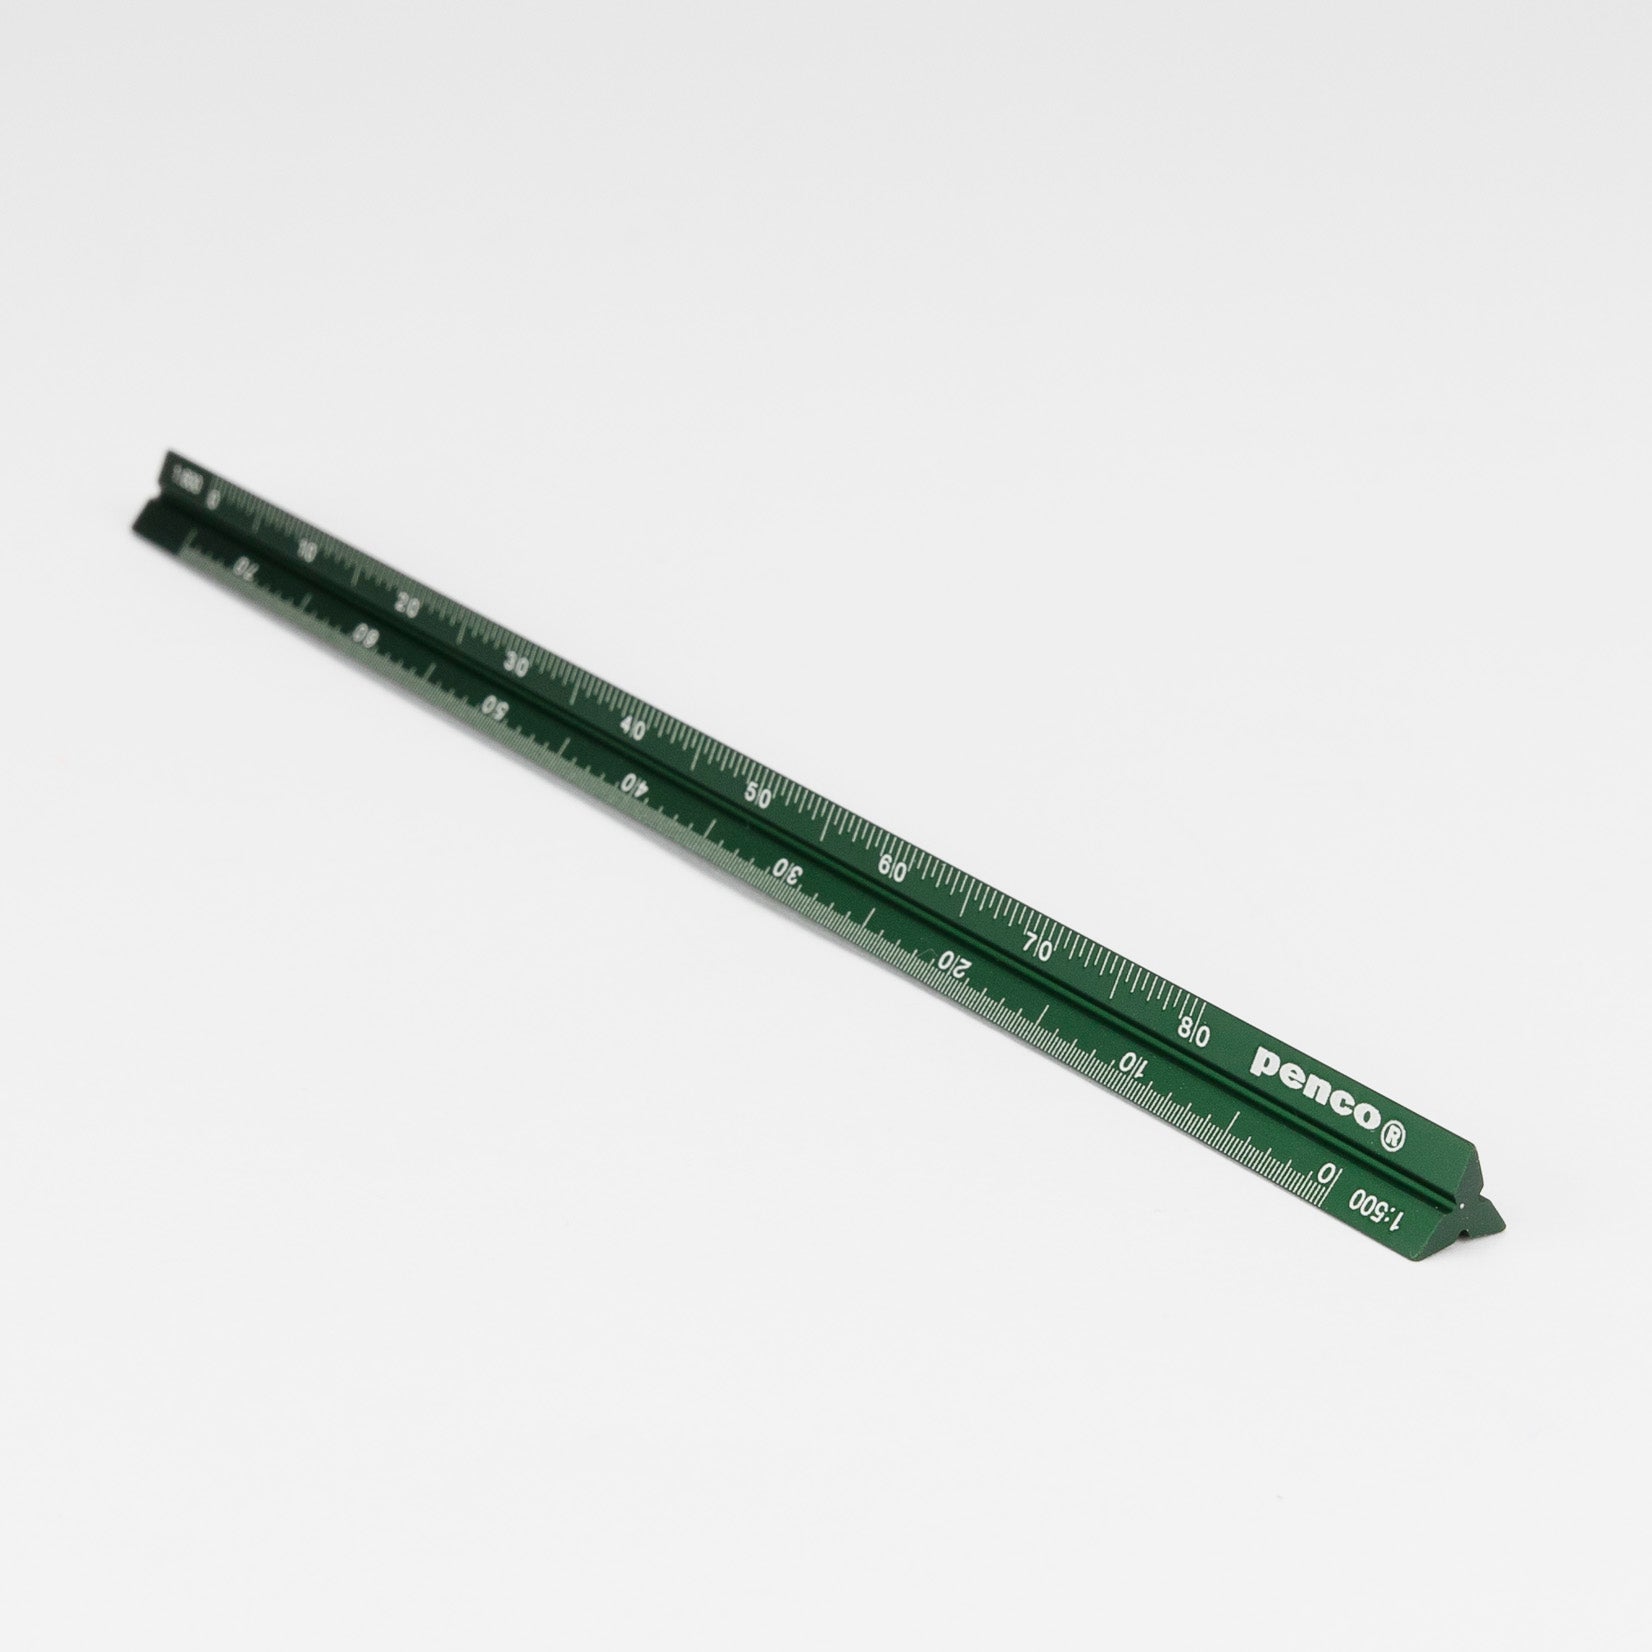 Penco Drafting Scale Zeichenlineal Ruler Lineal 15 cm aus Aluminium Dreikantlineal grün green